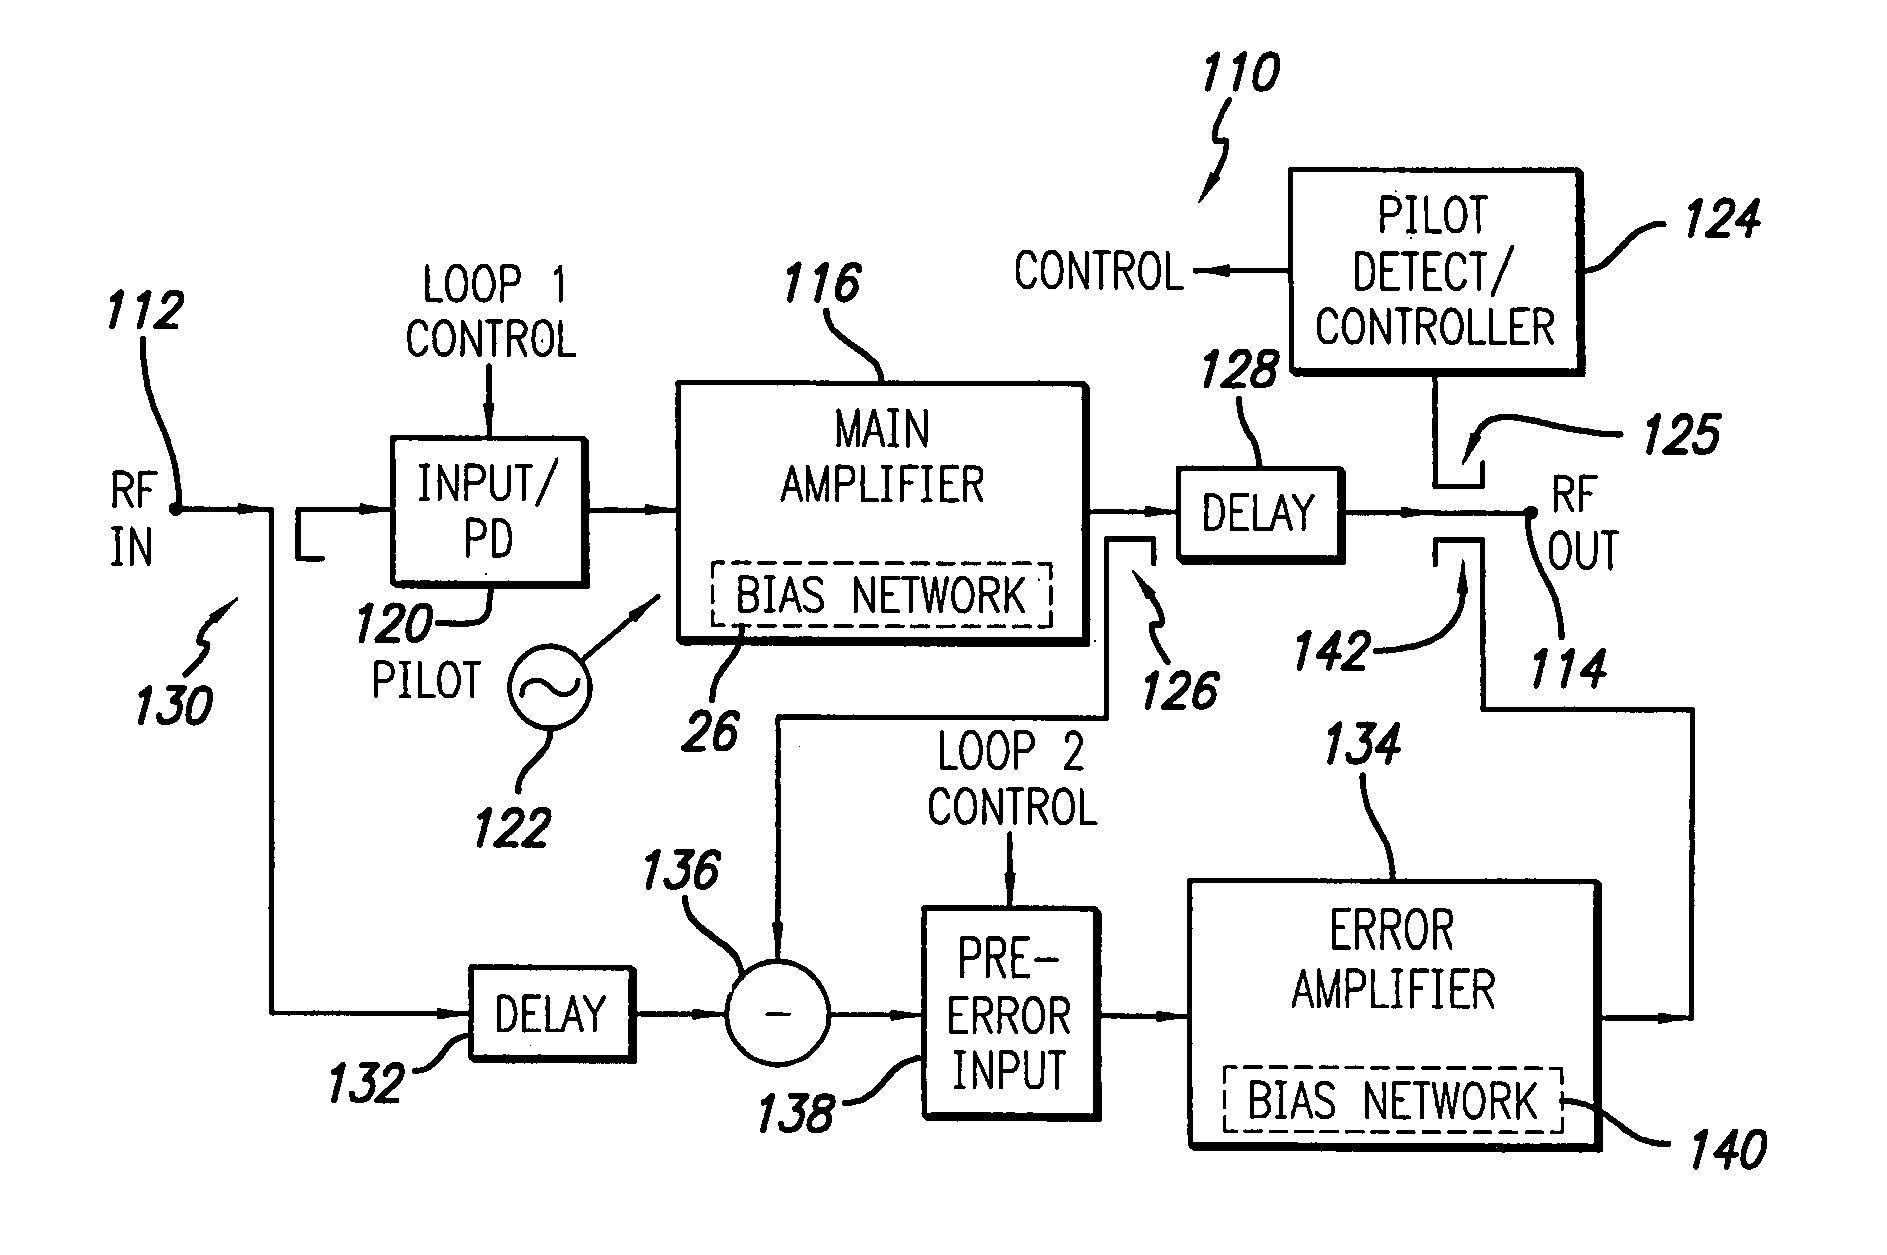 Feed forward amplifier employing bias circuit topologies for minimization of RF amplifier memory effects